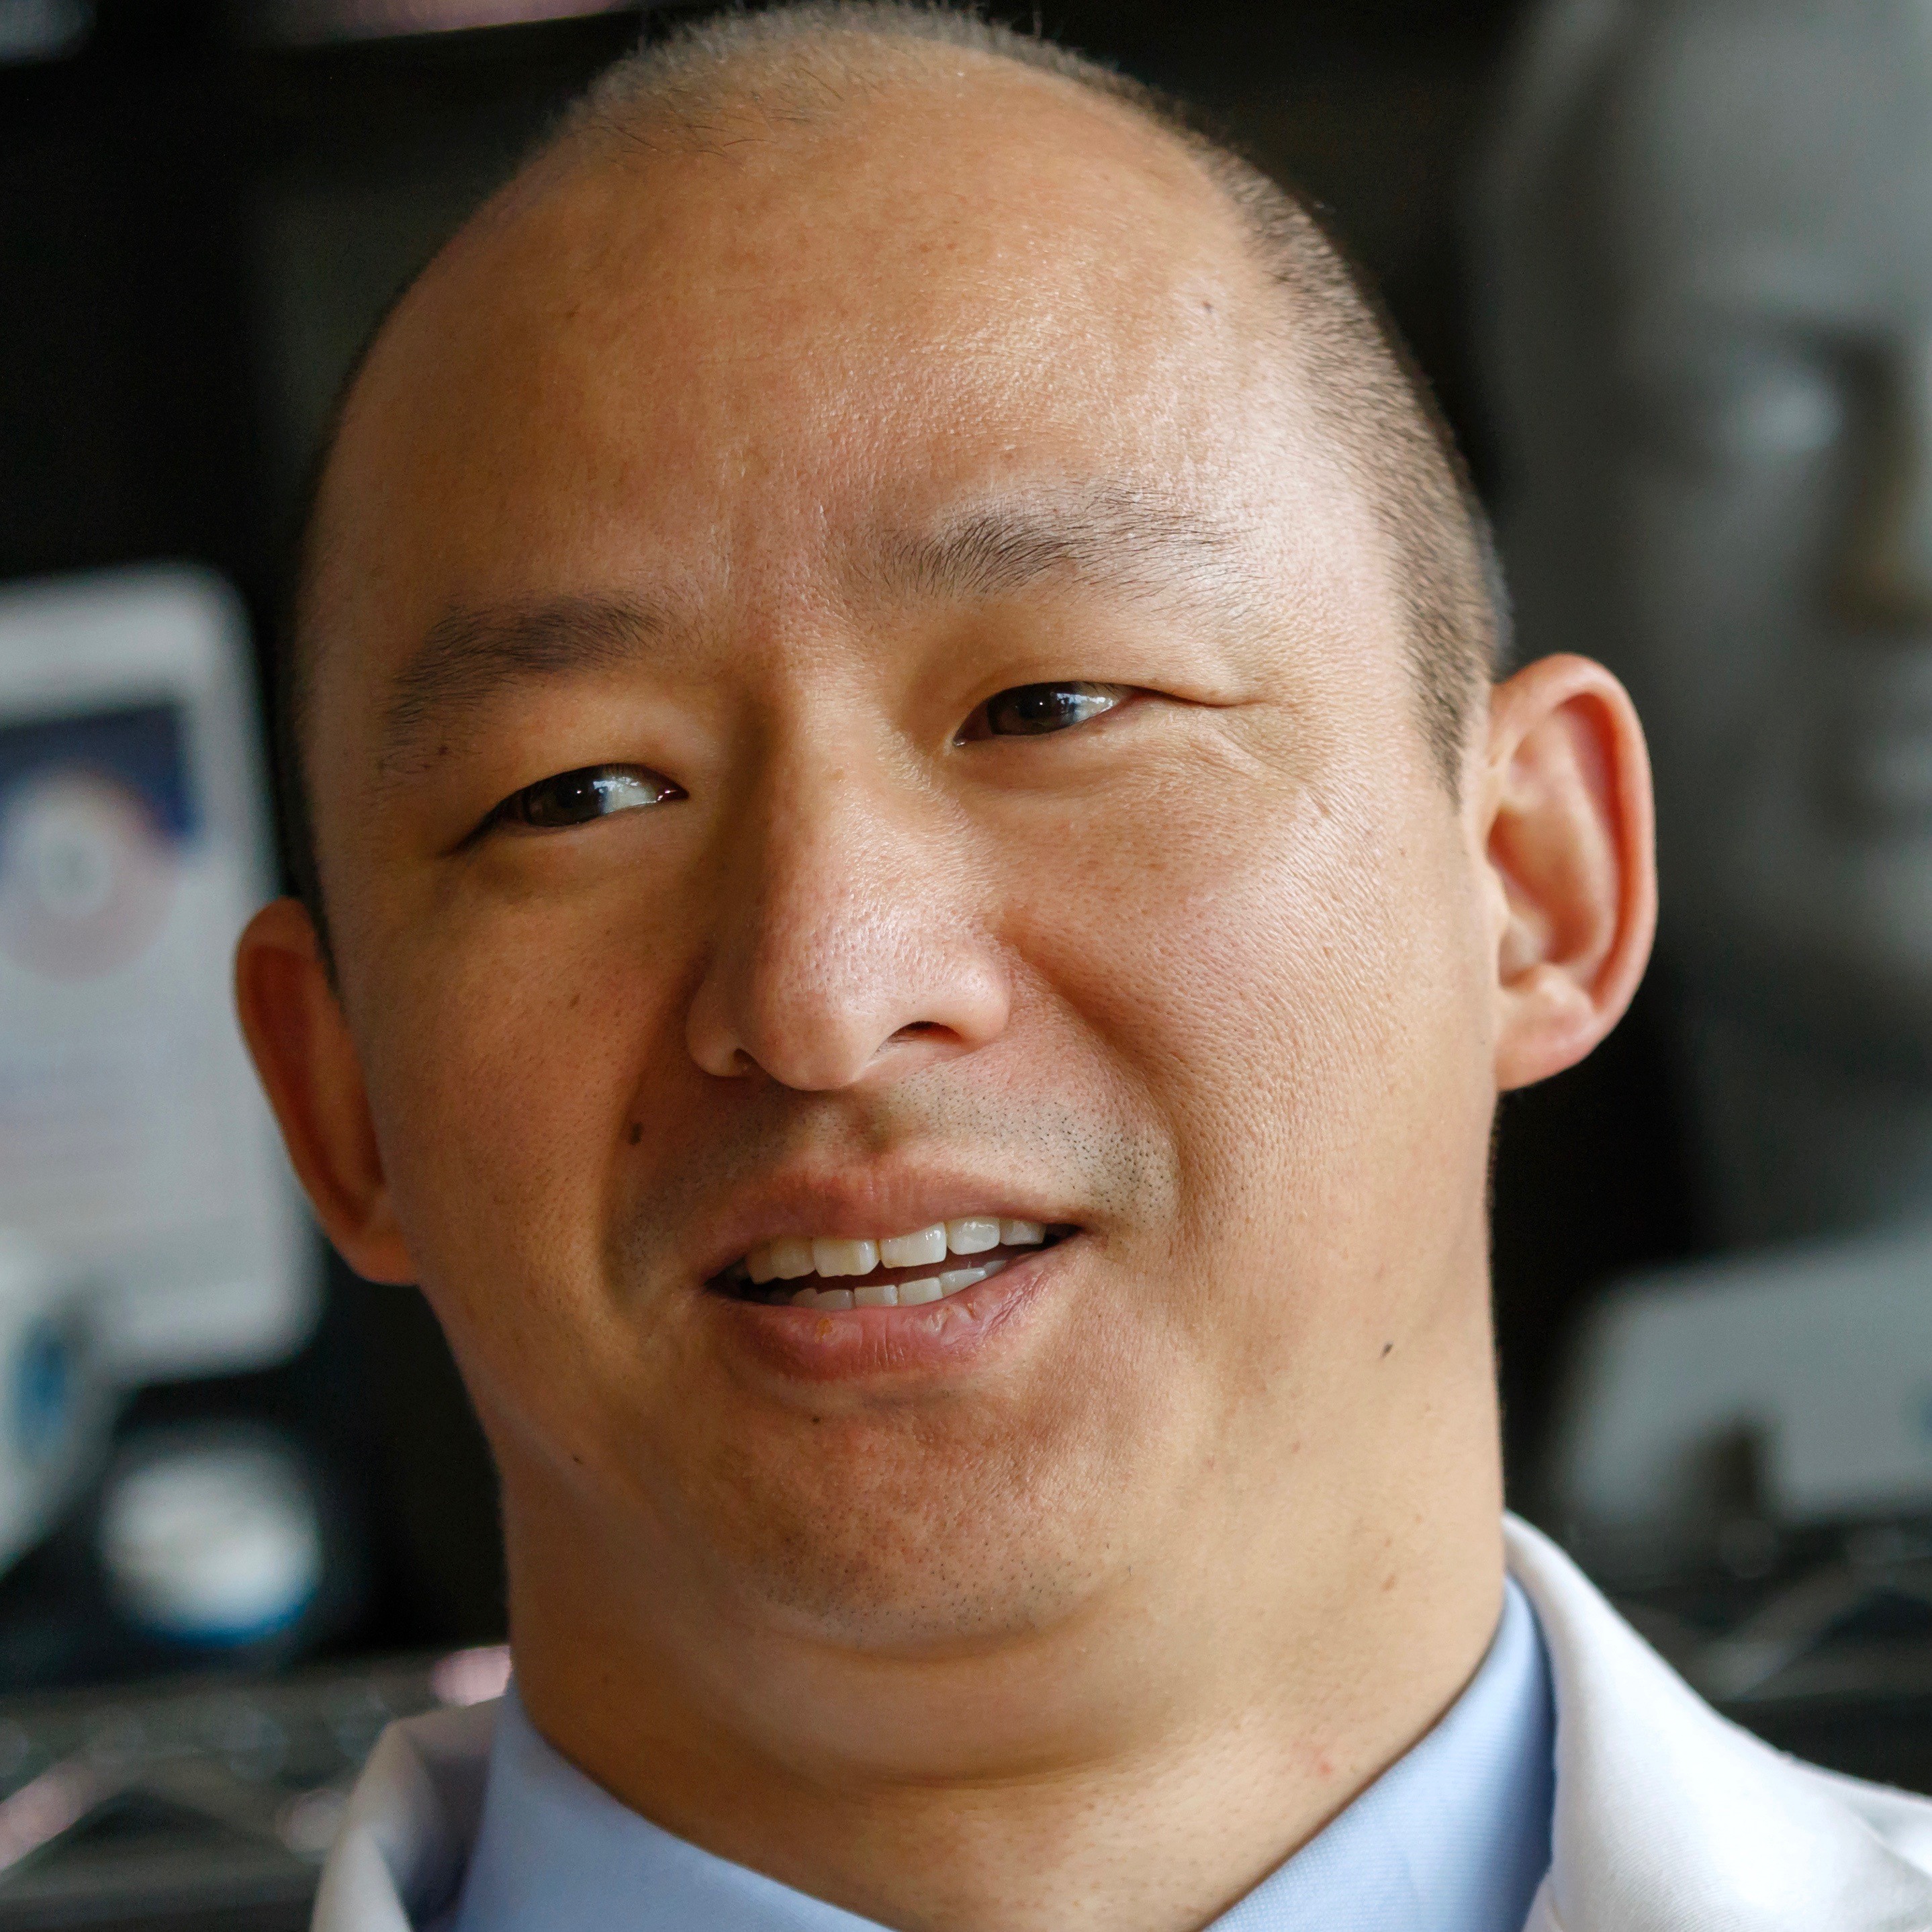 Dr. Derek Lam, provider at the Sleep Disorders Clinic